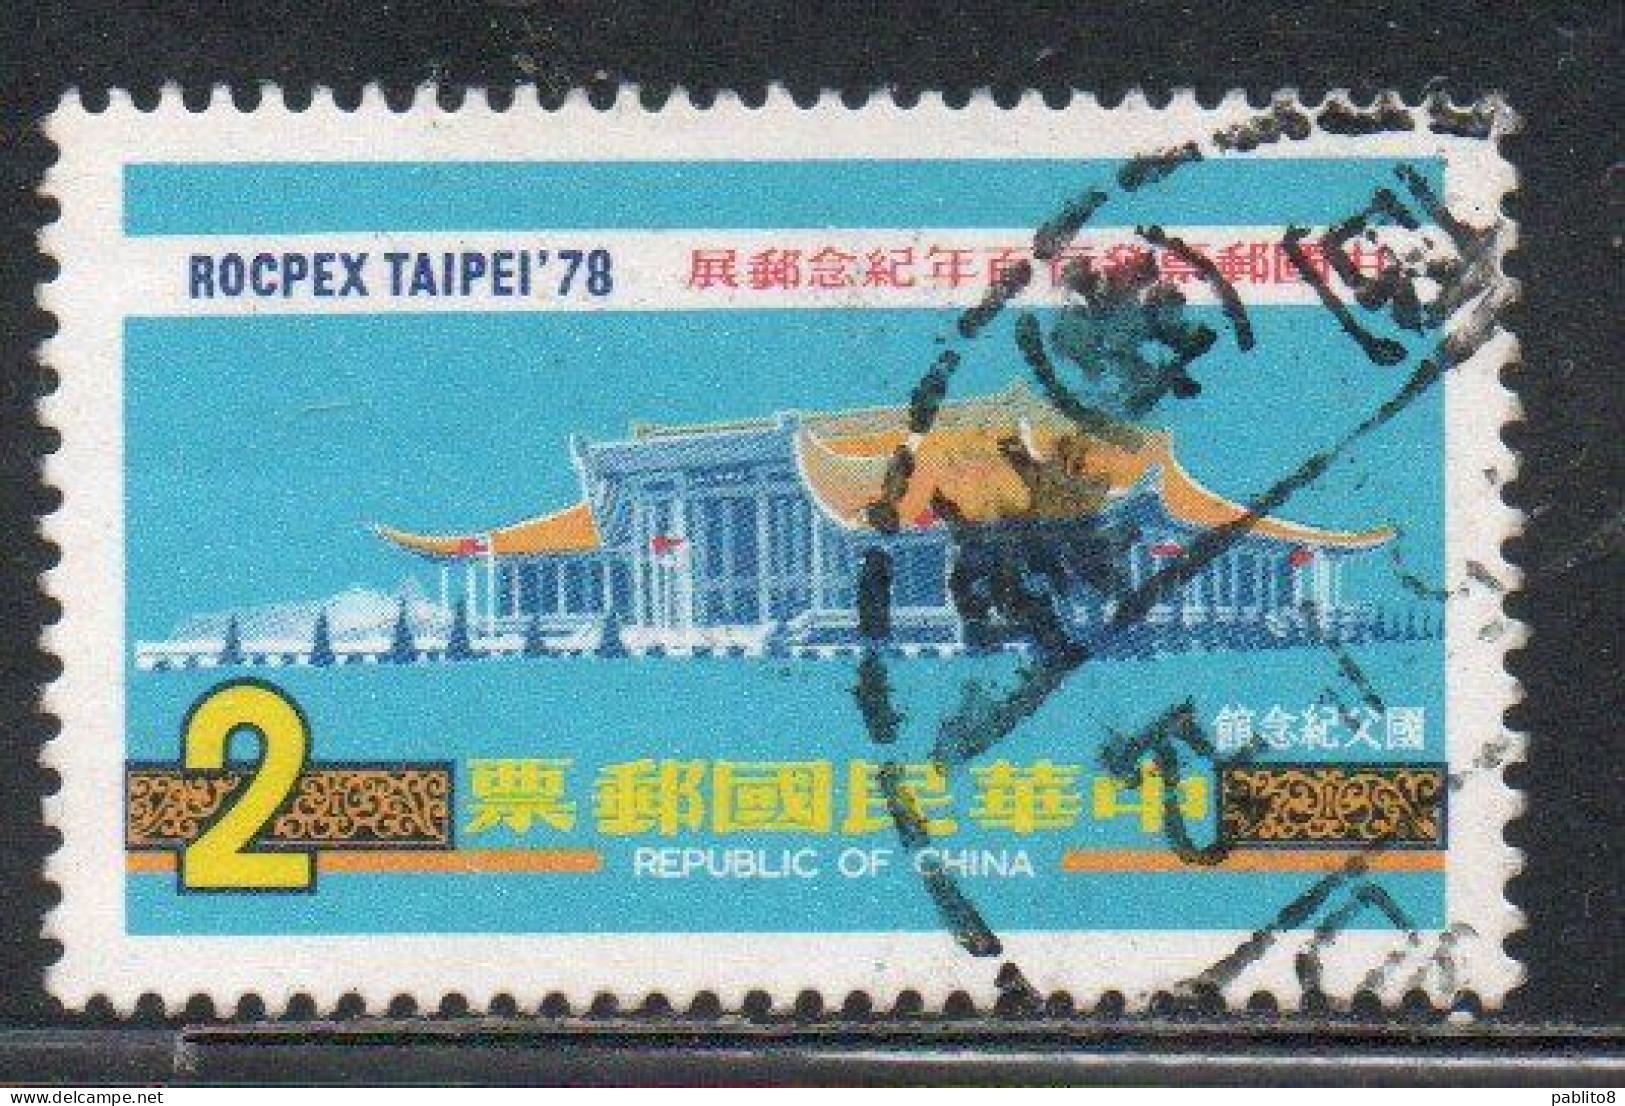 CHINA REPUBLIC CINA TAIWAN FORMOSA 1978 ROCPEX78 PHILATELIC EXHIBITION SUN YAT-SEN MEMORIAL HALL 2$ USED USATO OBLITERE' - Gebraucht